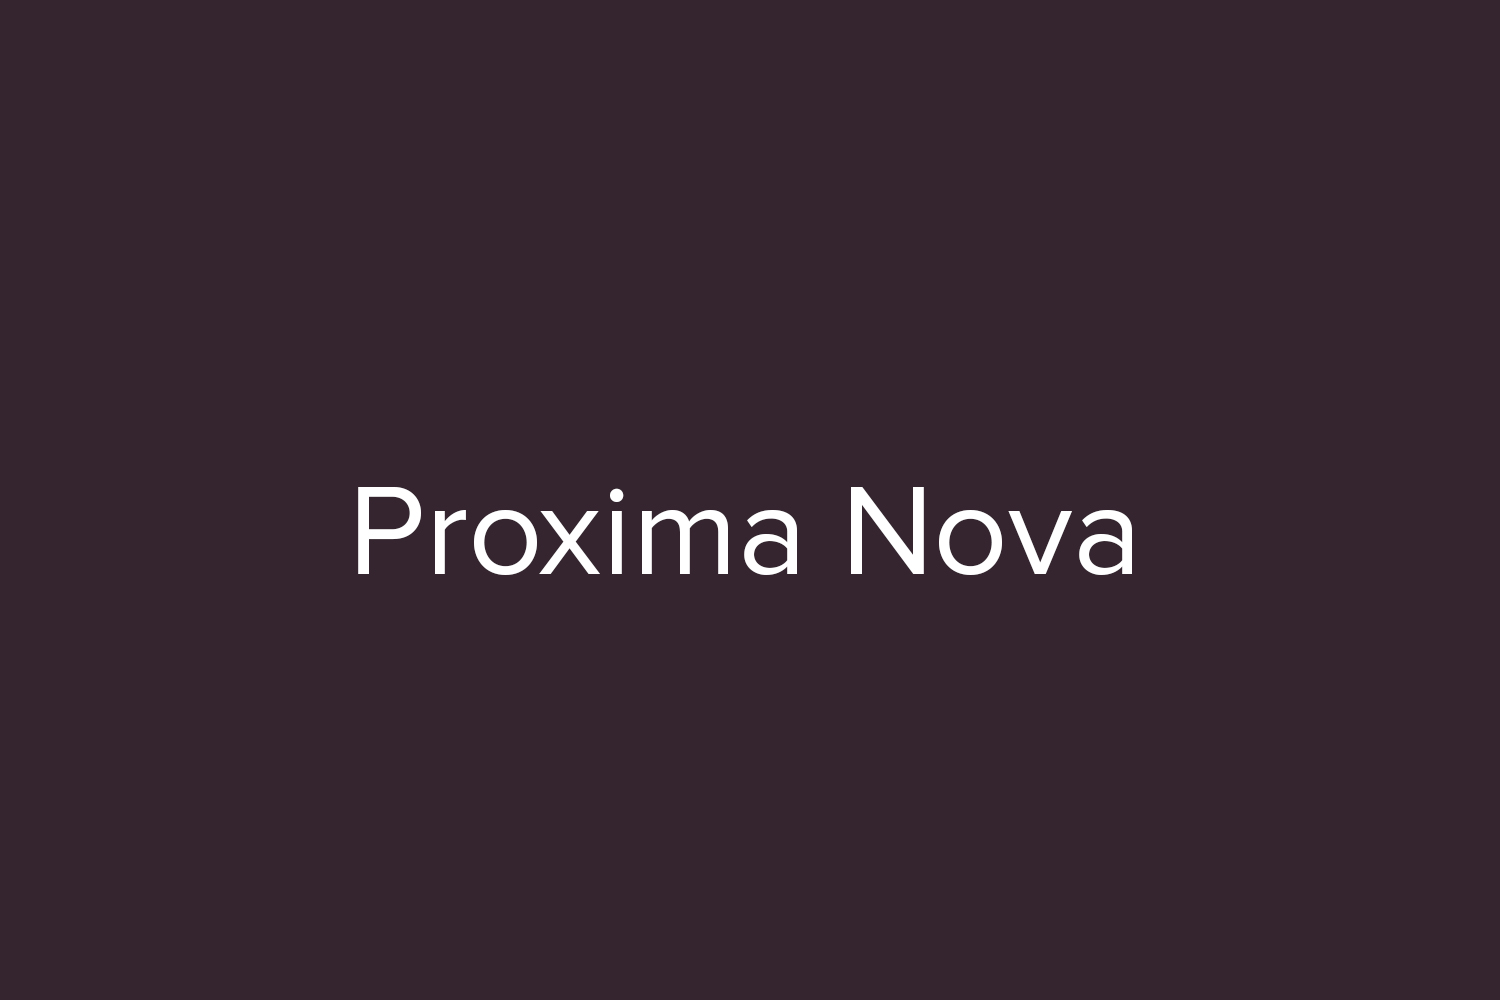 download proxima nova font free for word